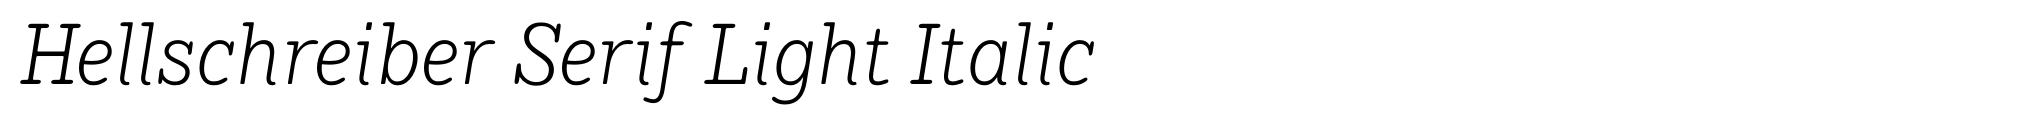 Hellschreiber Serif Light Italic image